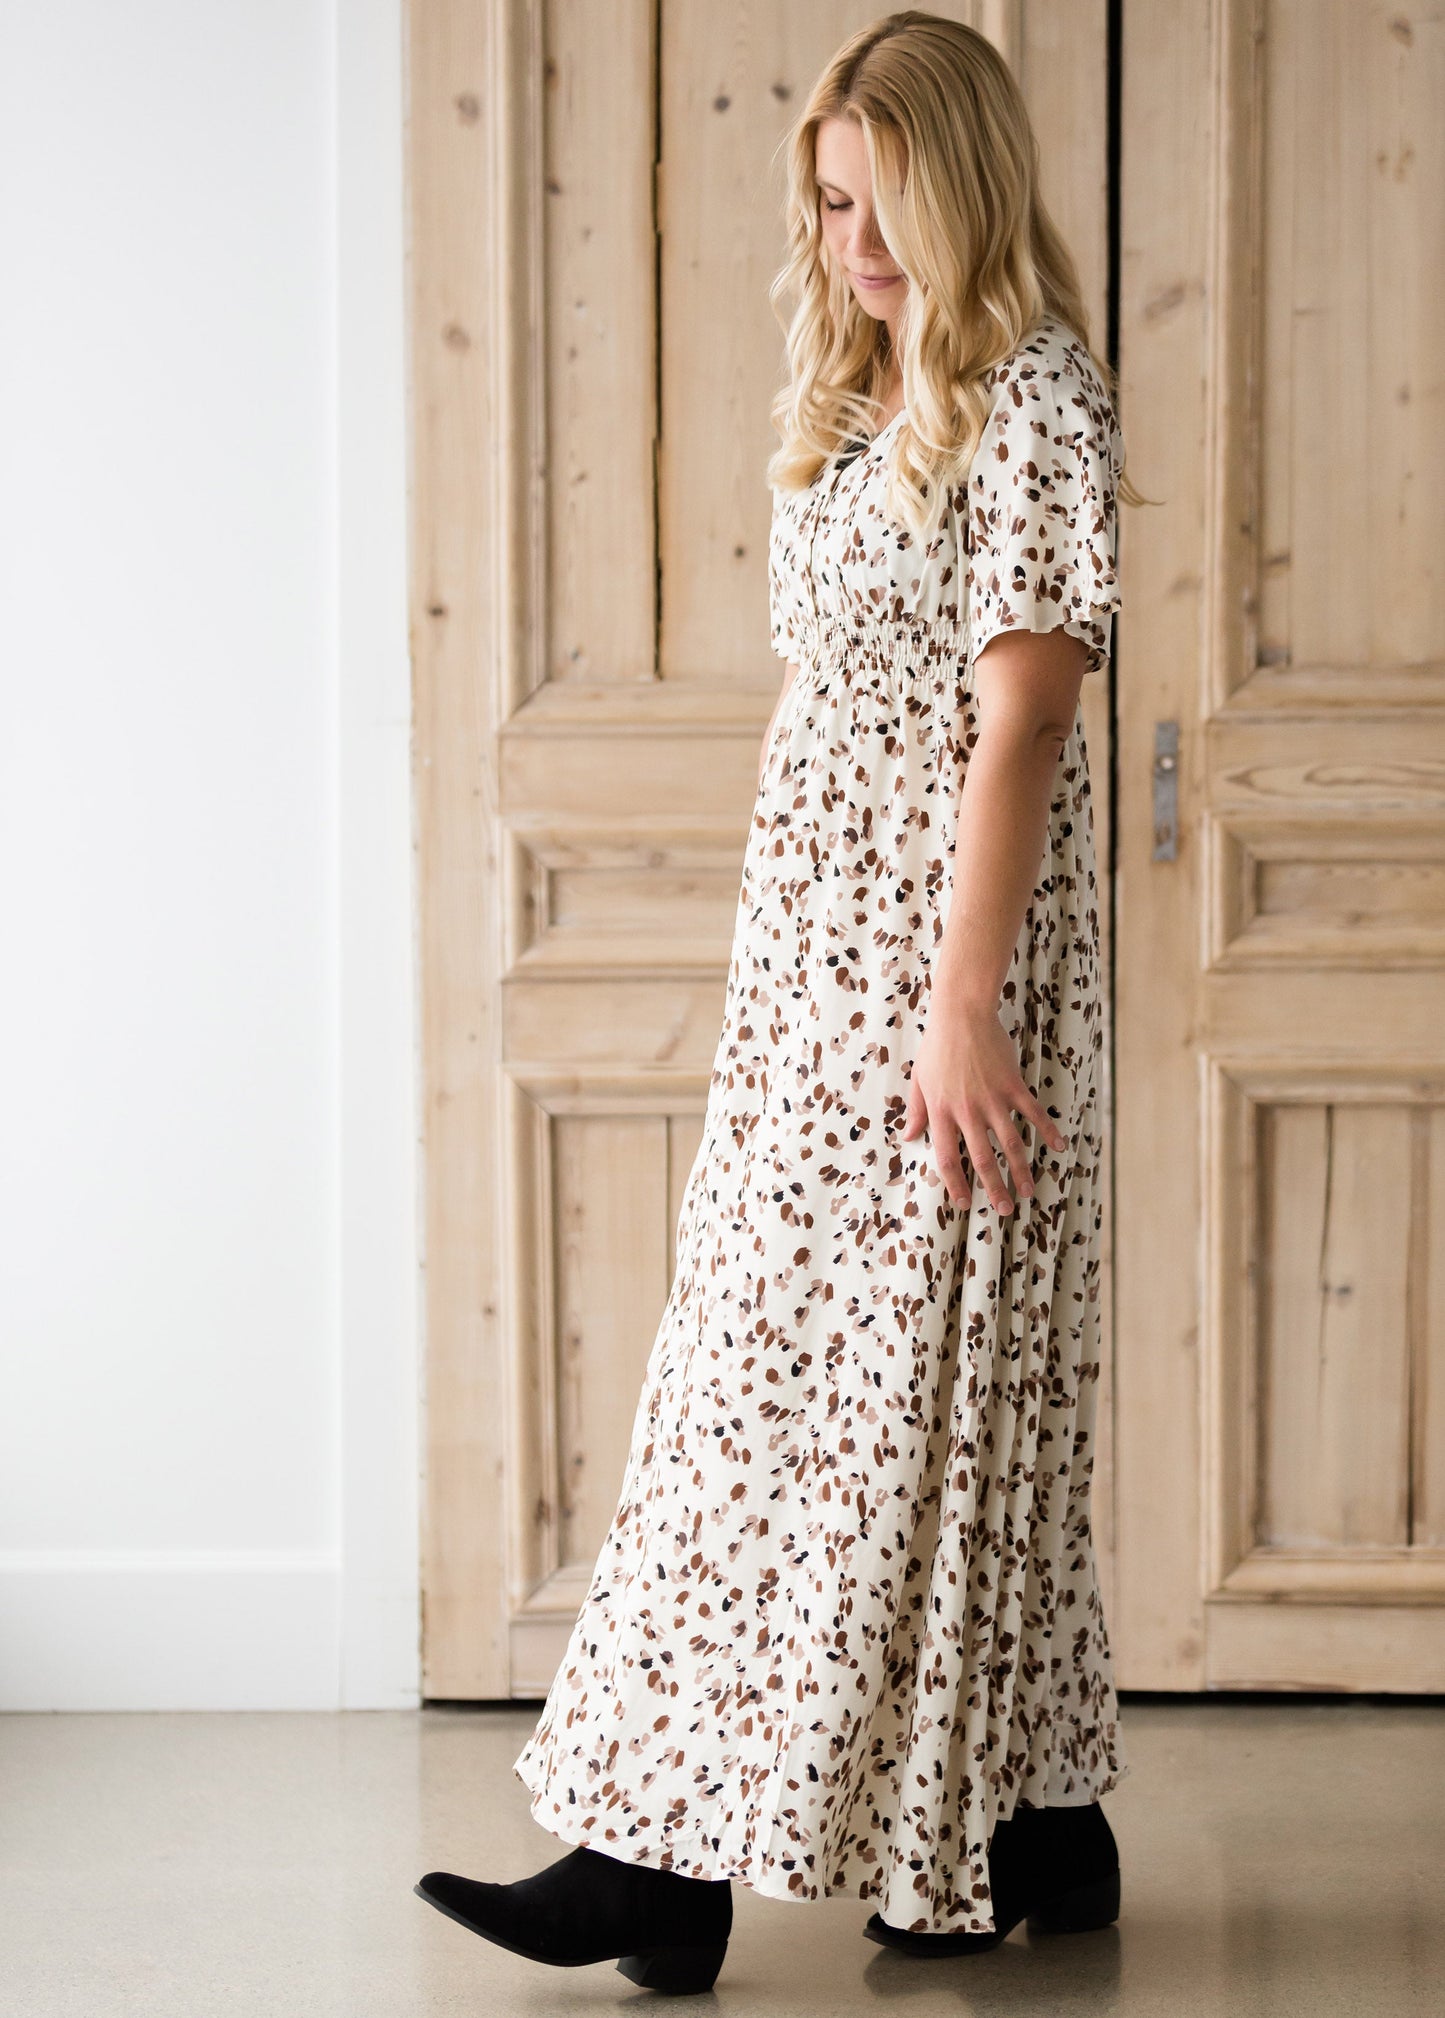 Leopard Print Smocked Maxi Dress-FINAL SALE Dresses